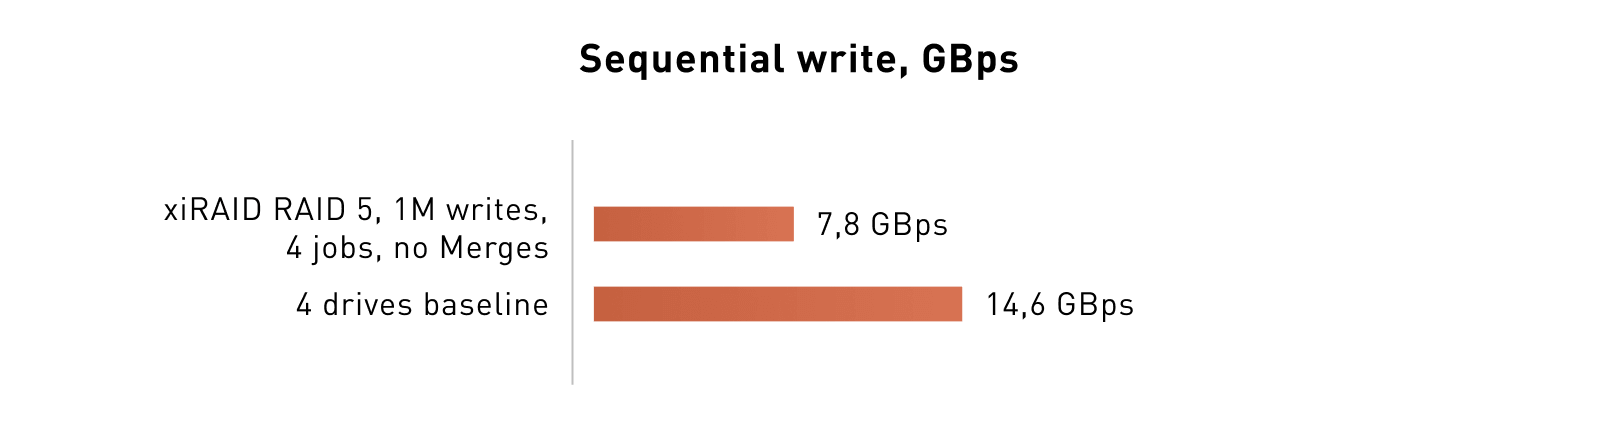 Sequential write xiRAID vs baseline